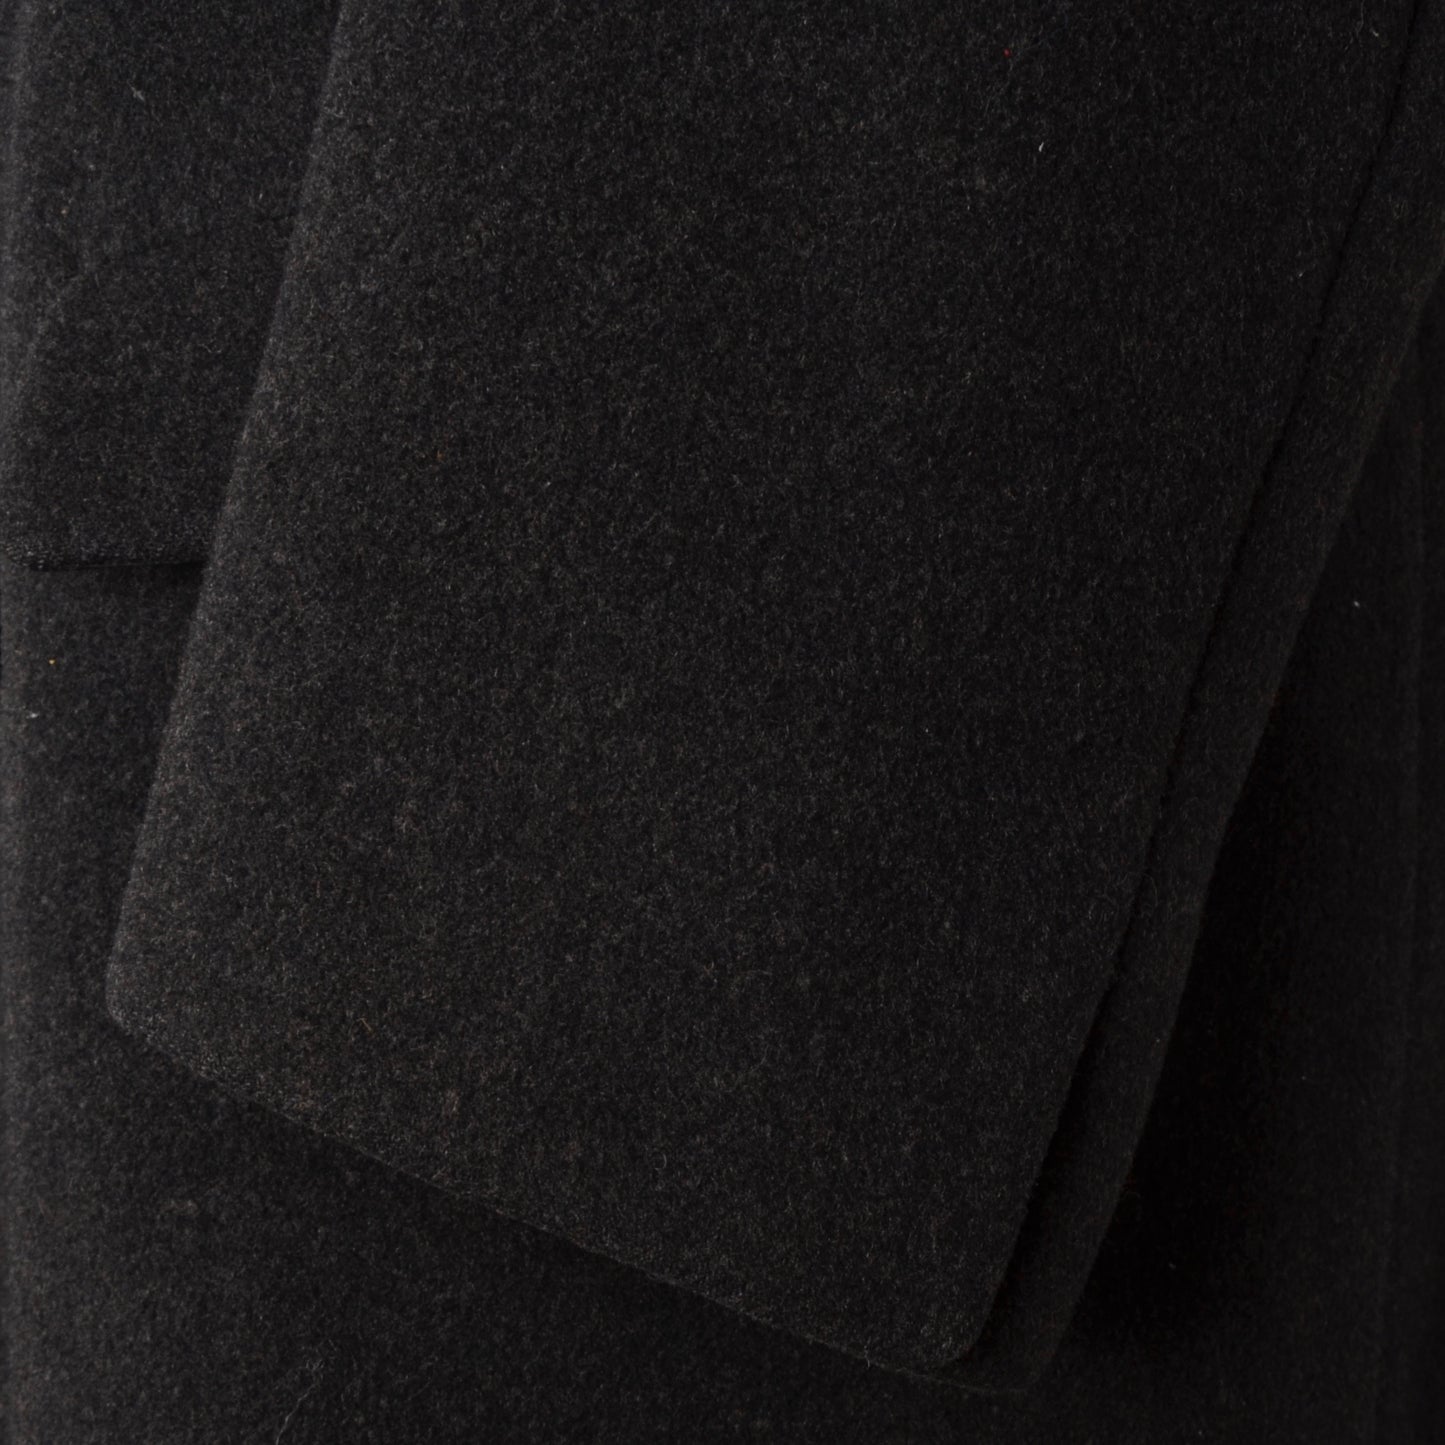 1940 Bespoke Double-Breasted Overcoat Astrakahn Collar - Charcoal